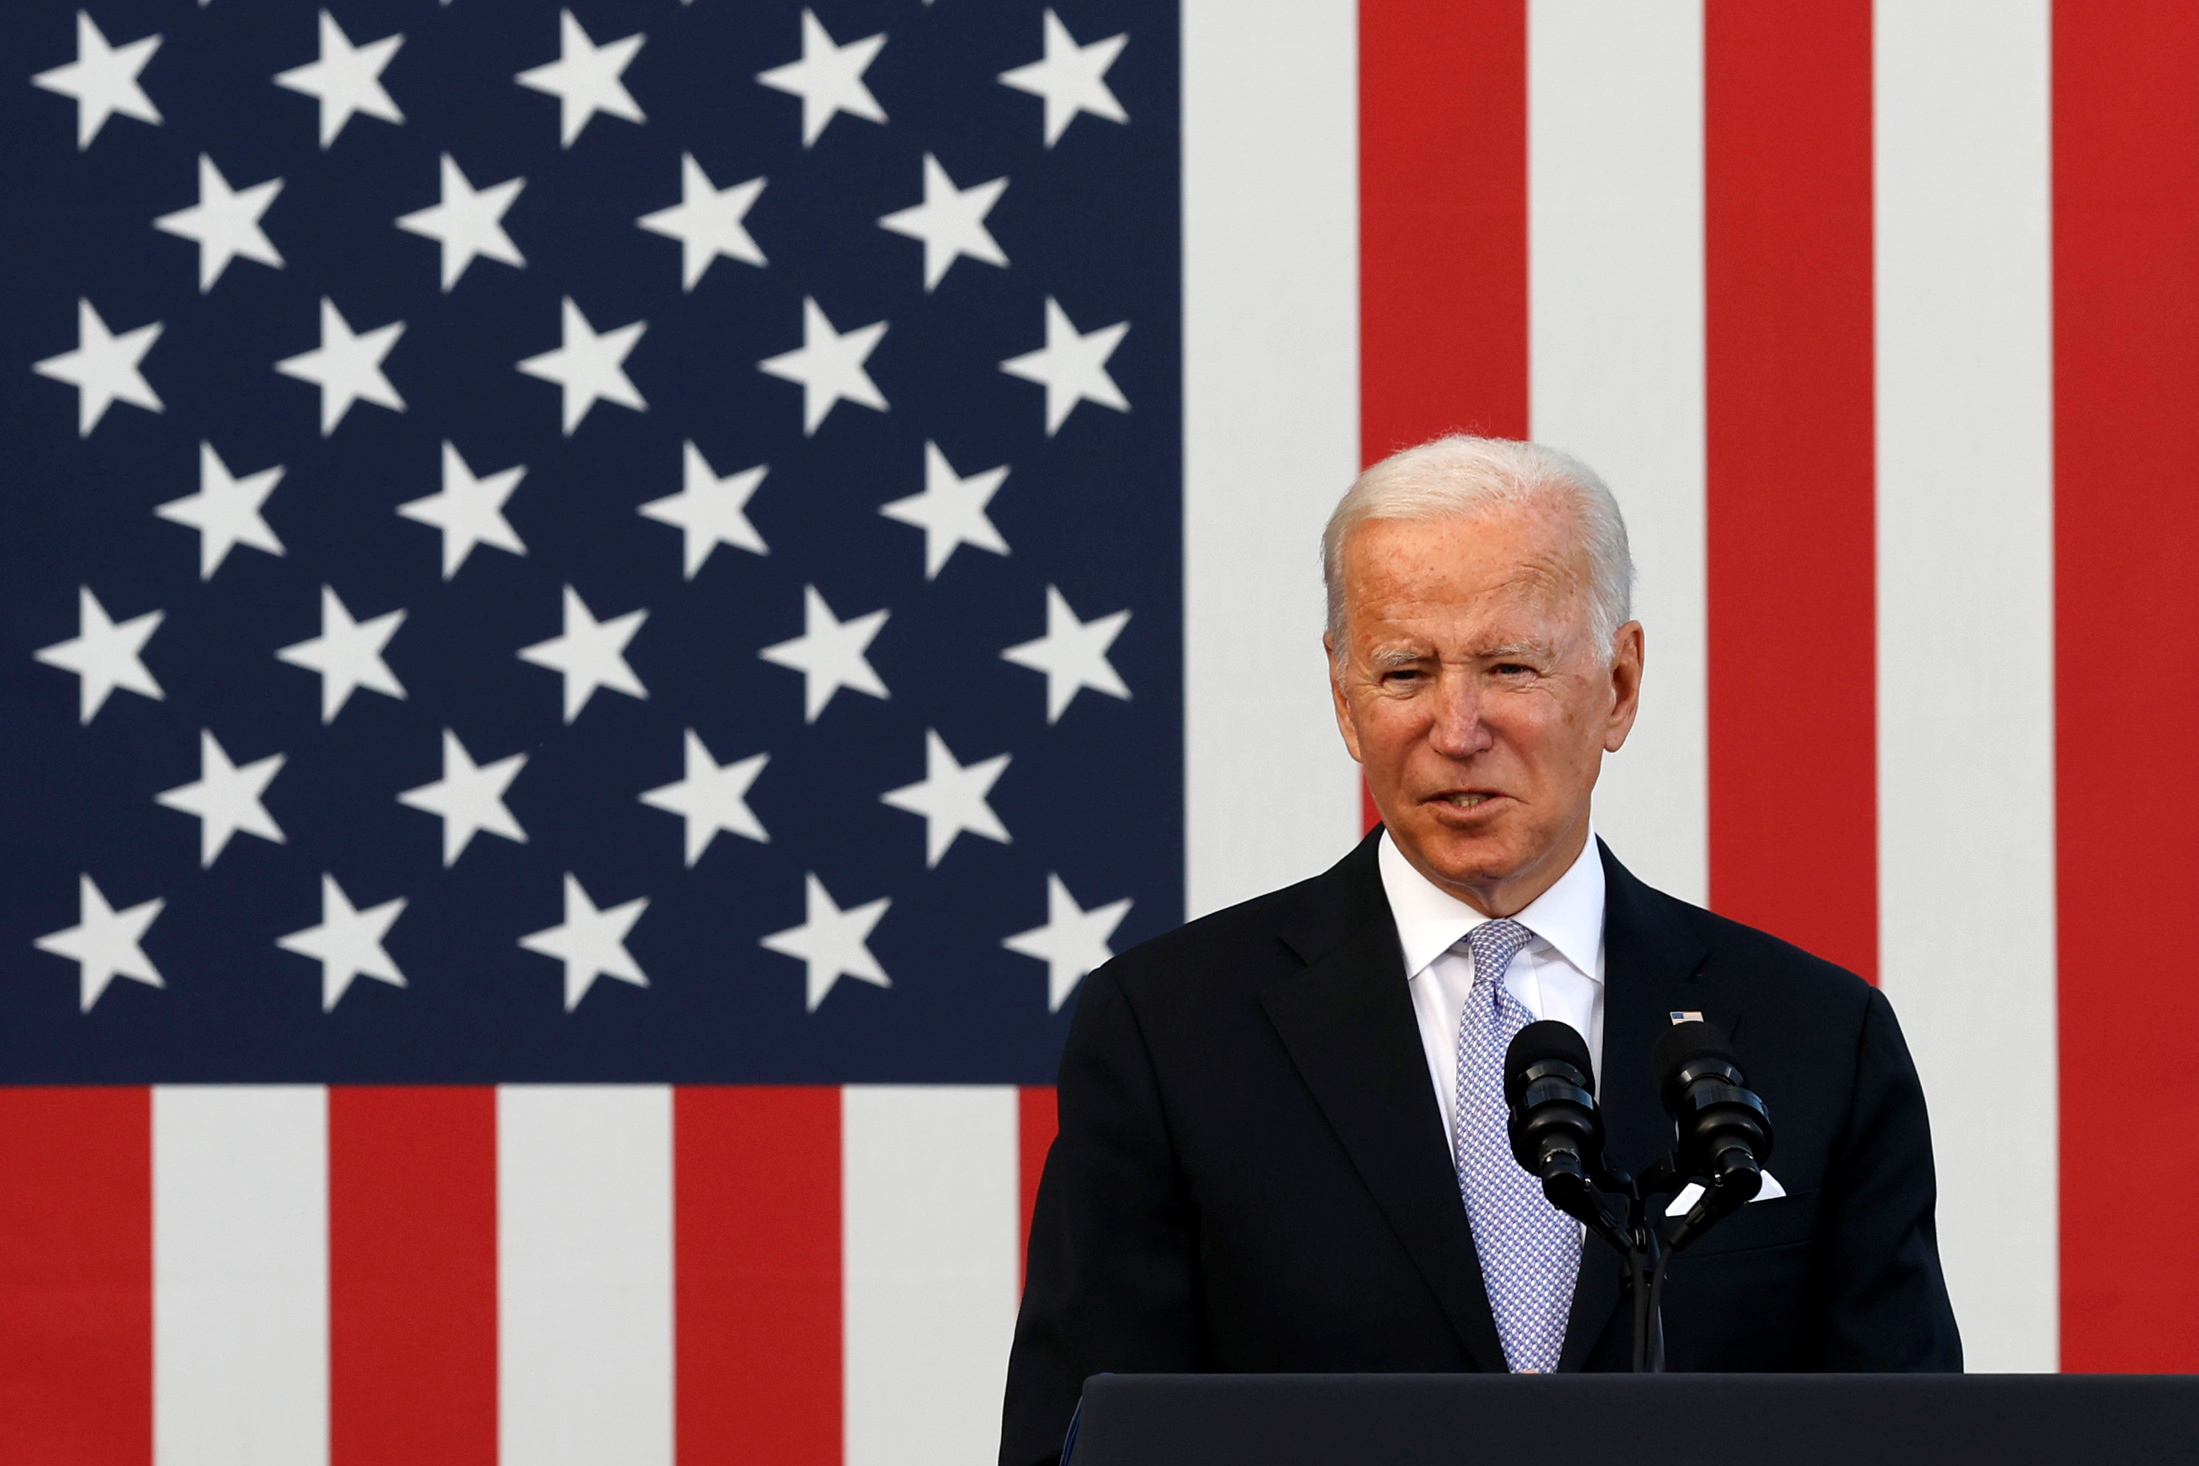 U.S. President Joe Biden delivers remarks on infrastructure legislation at the Electric City Trolley Museum in Scranton, Pennsylvania, U.S. October 20, 2021. REUTERS/Jonathan Ernst/File Photo